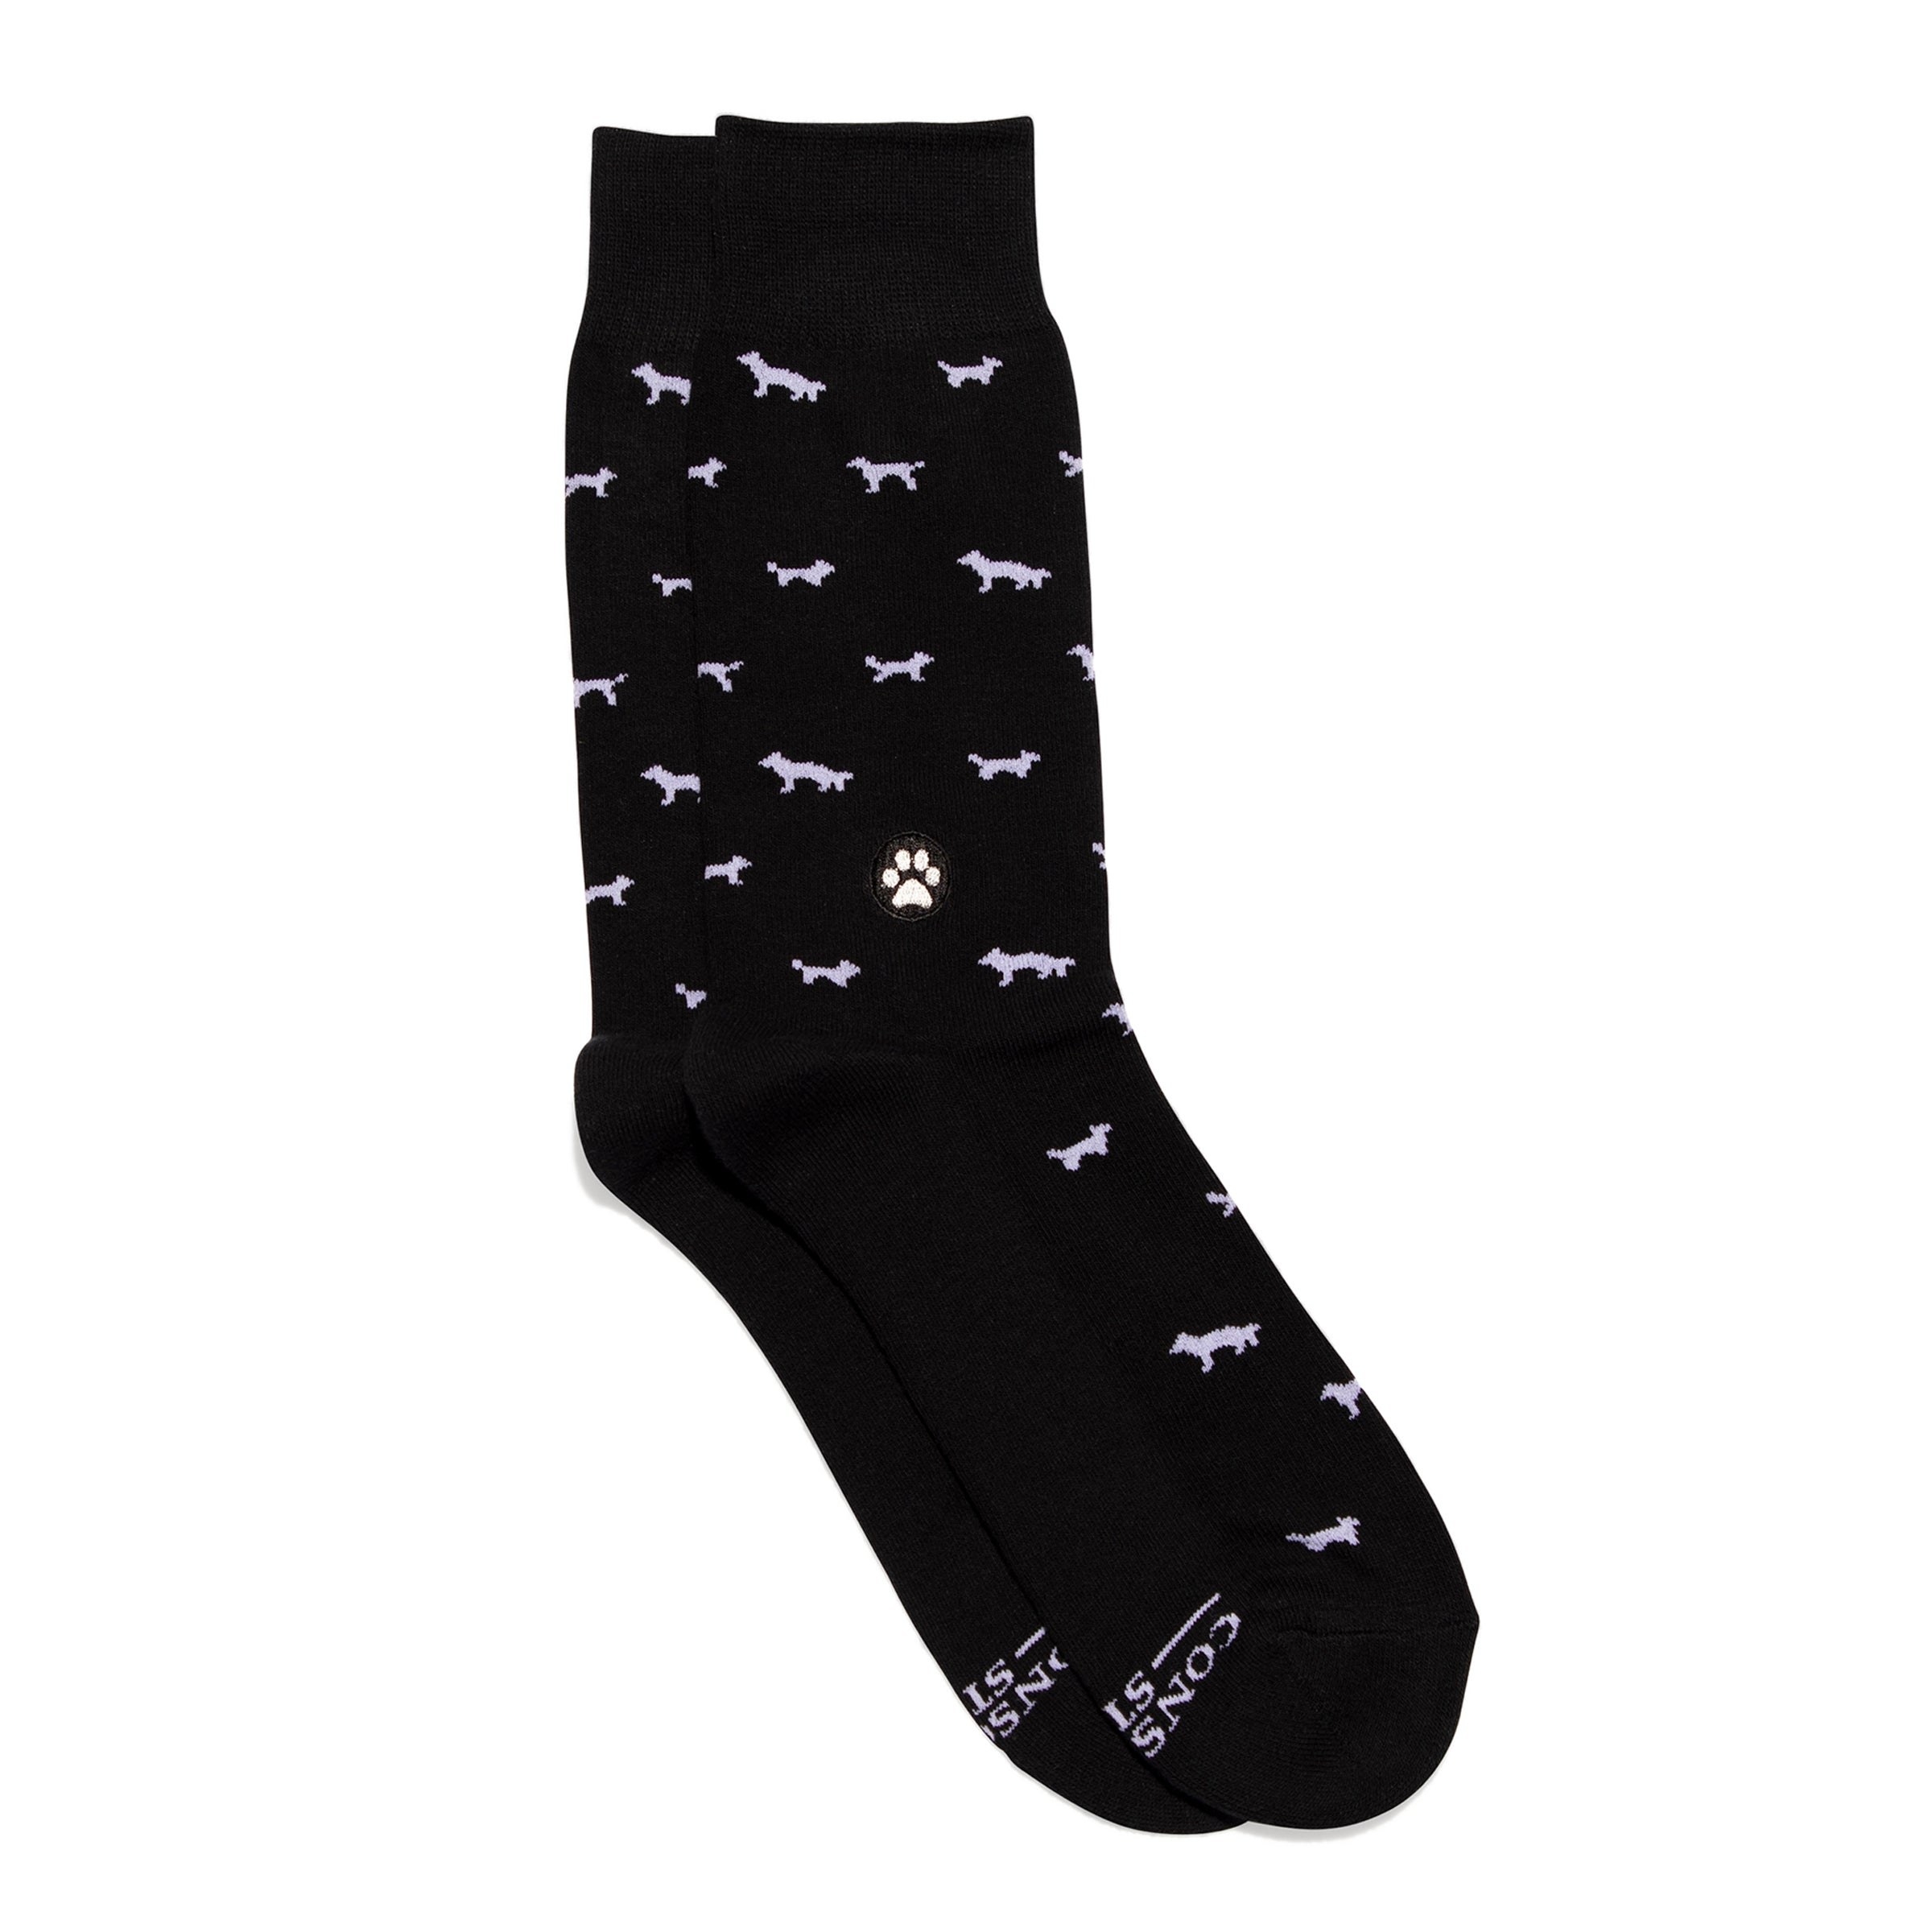 Conscious step black socks with dog print